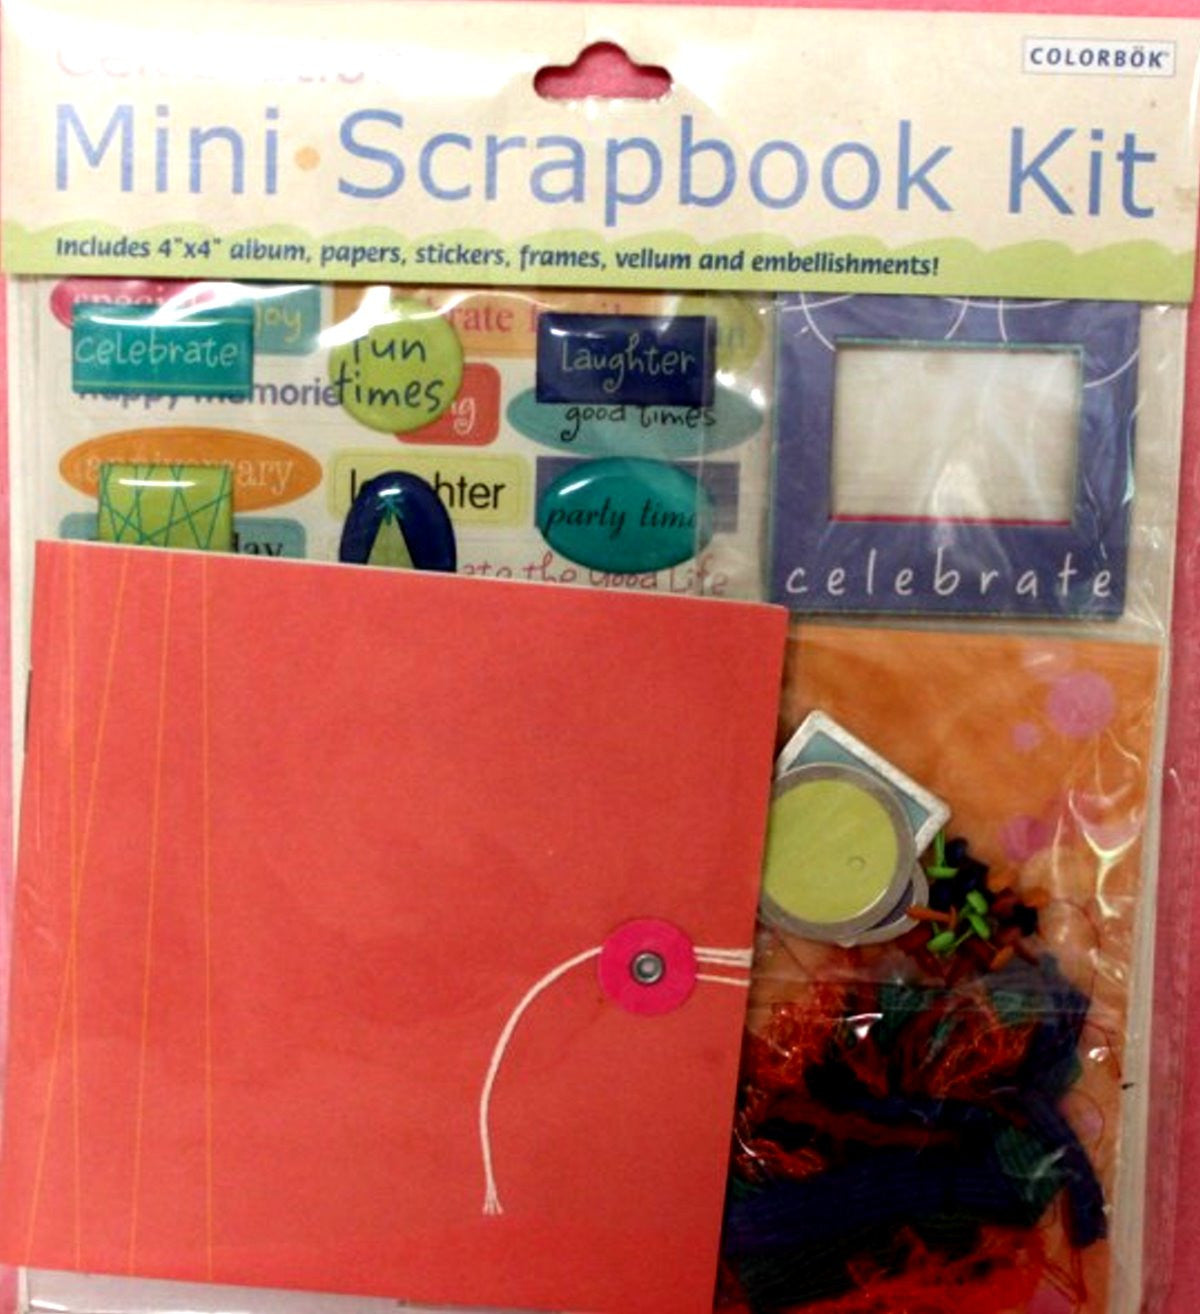 Colorbok Celebration Mini Scrapbook Kit - SCRAPBOOKFARE